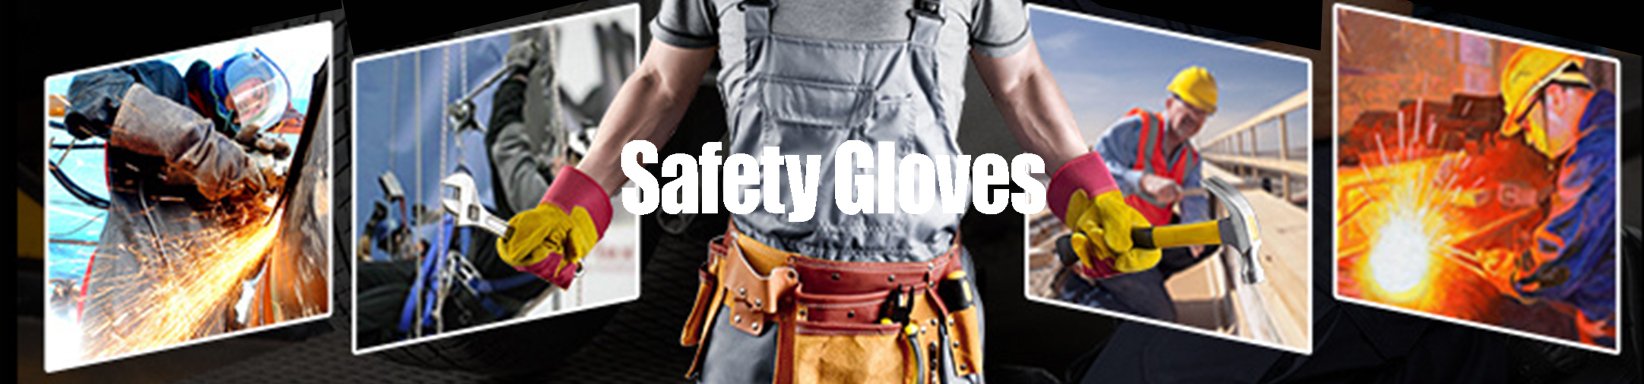 protective gloves - alive safety rescue ltd